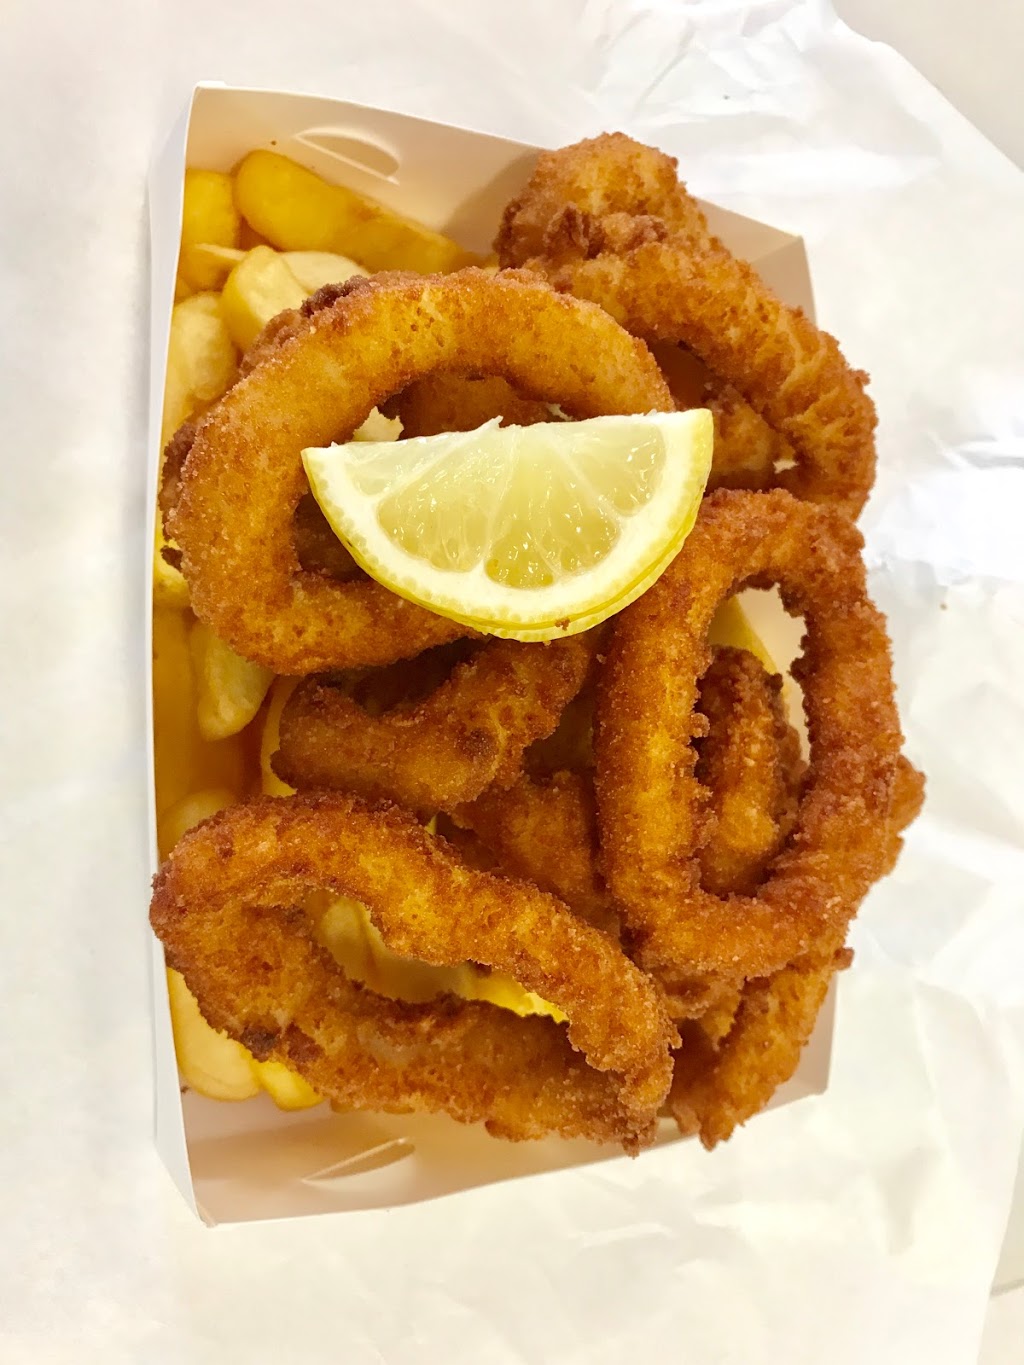 Mels Seafood Plus Burgers | restaurant | 155 Nineteenth Ave, Palm Beach QLD 4221, Australia | 0755359738 OR +61 7 5535 9738